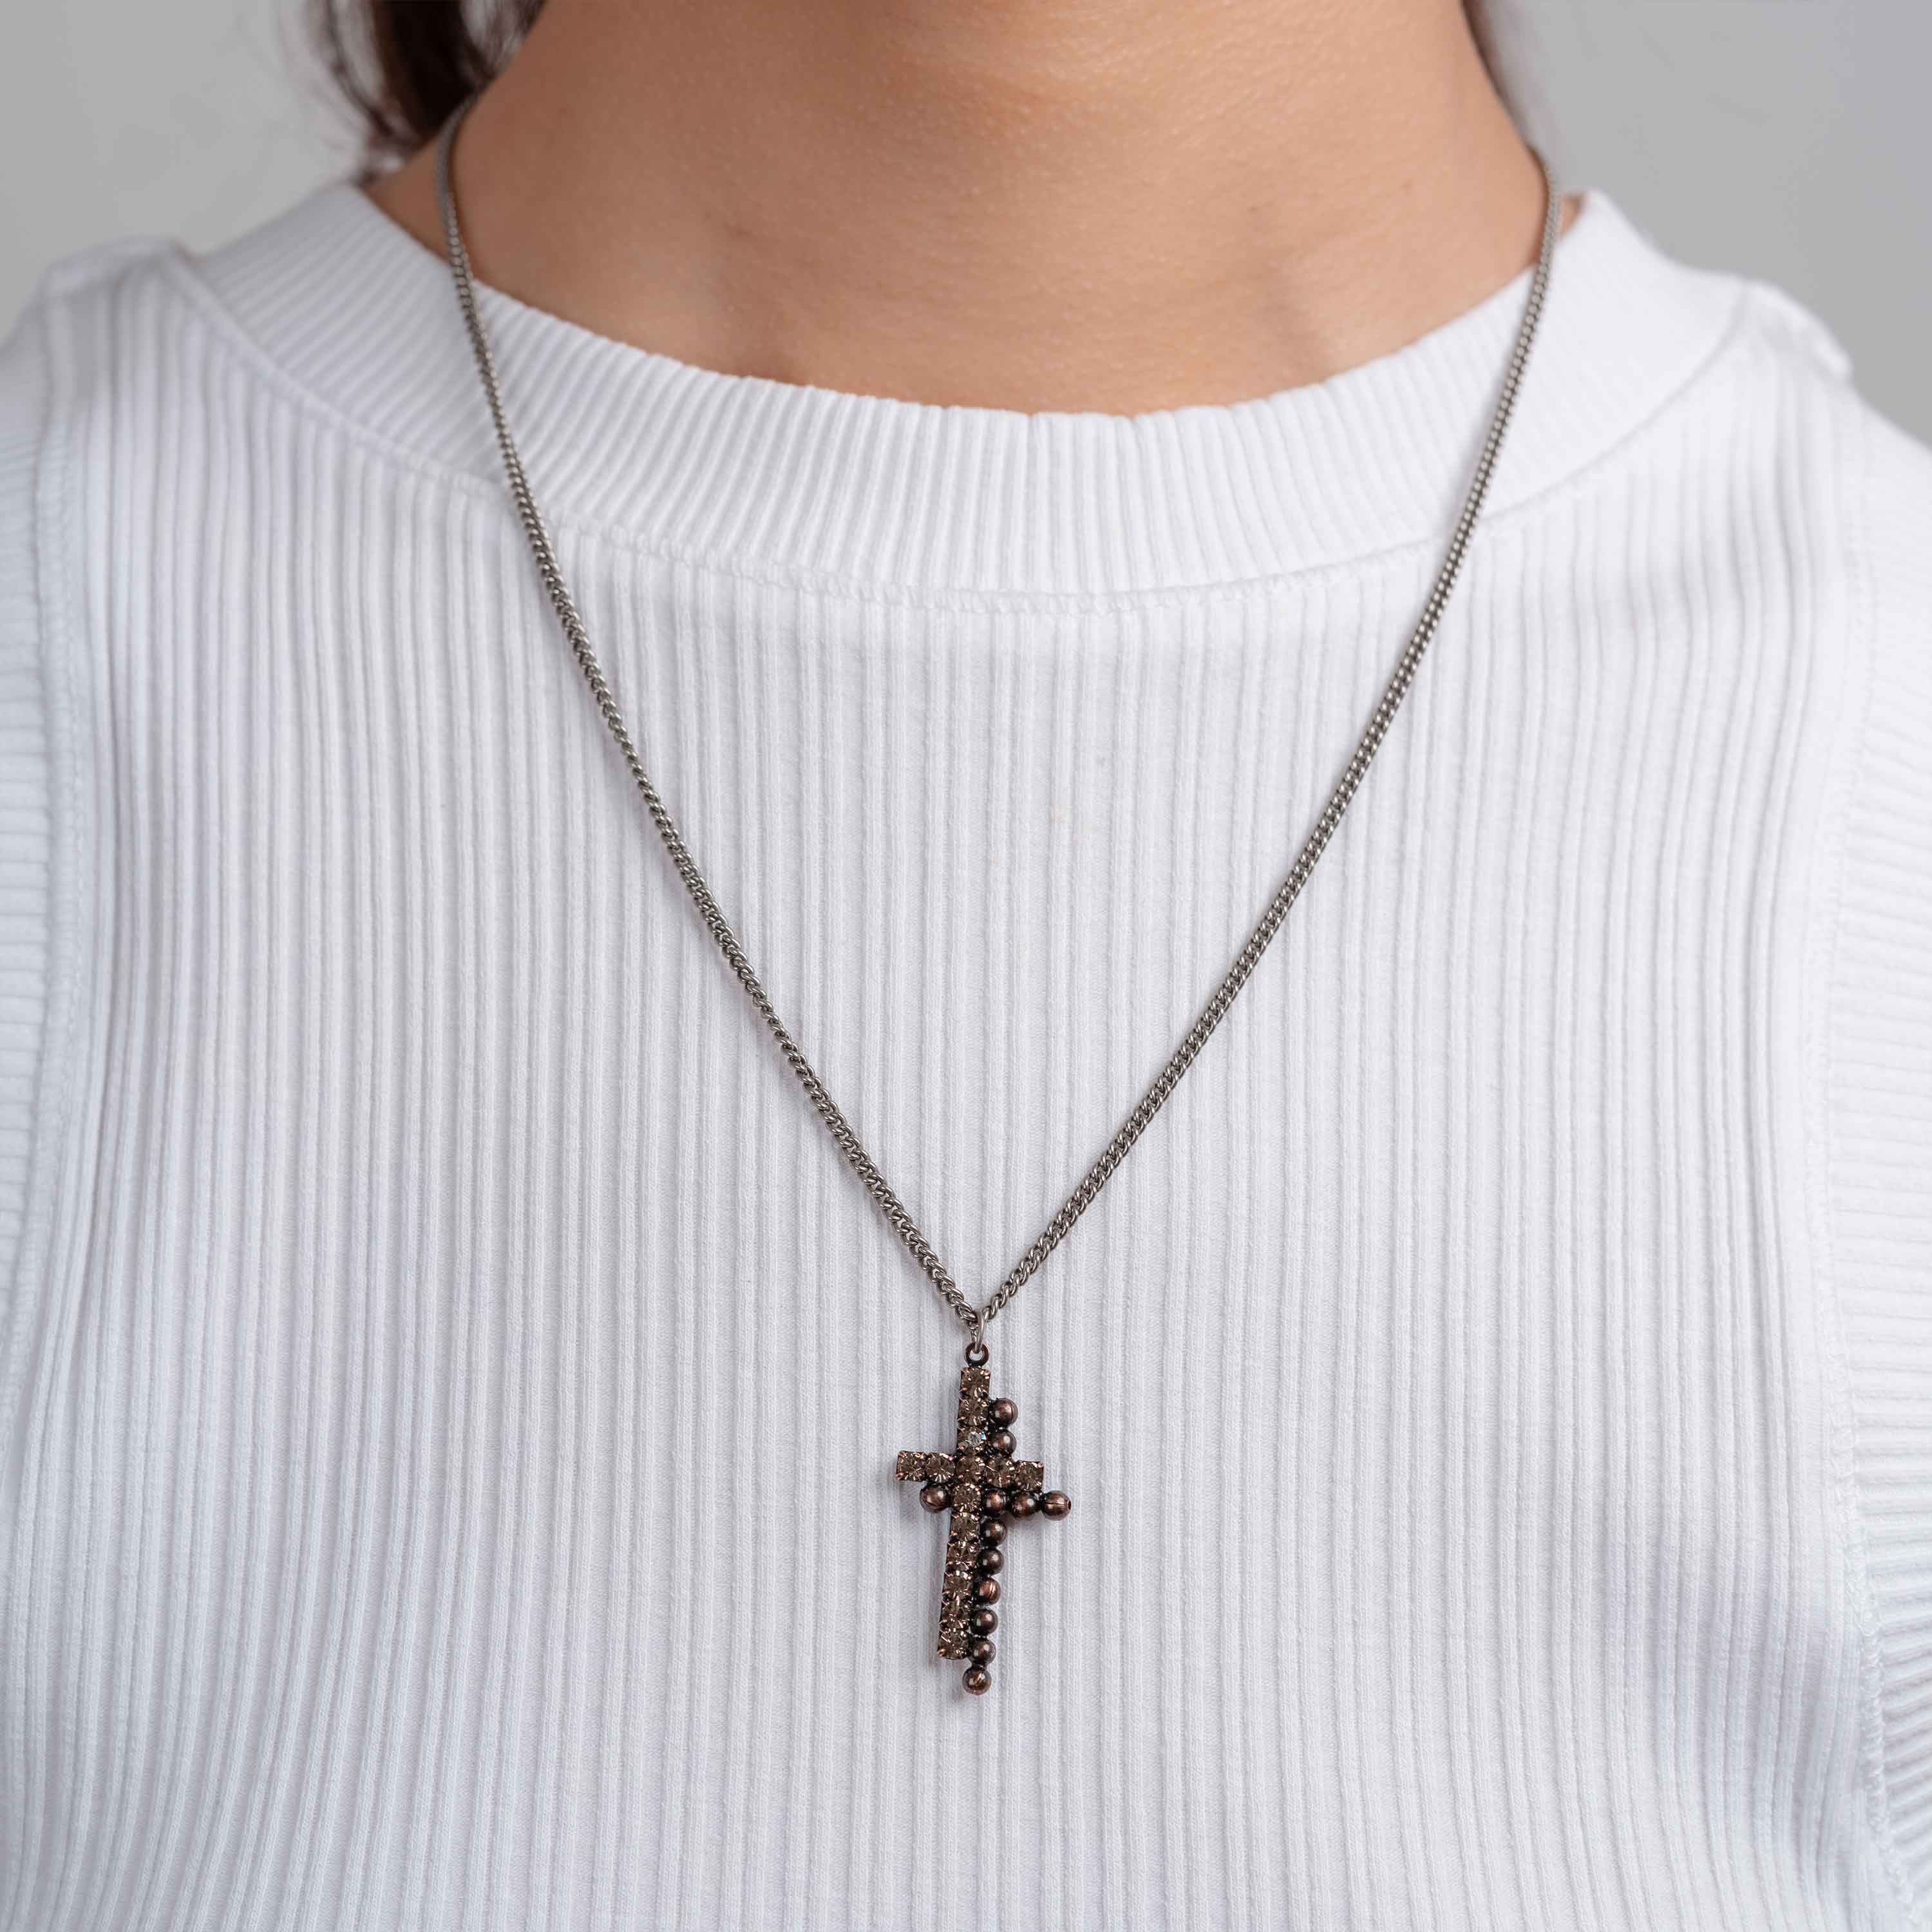 Night Cross Necklace